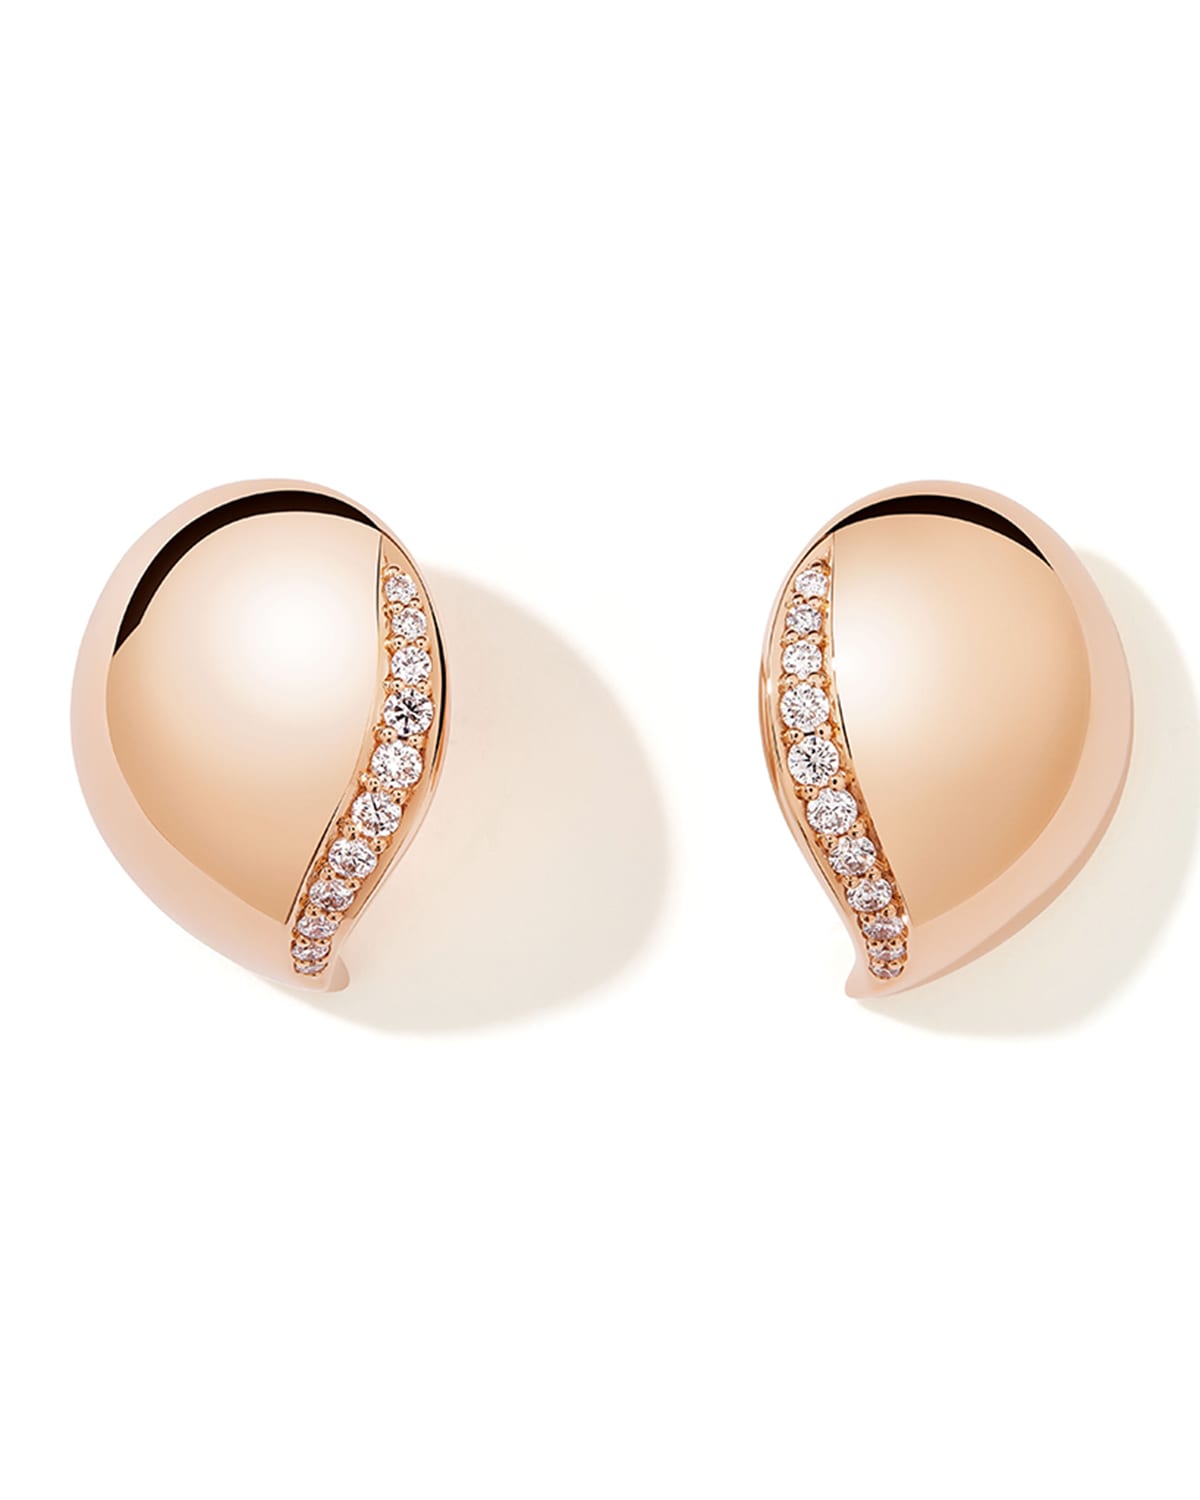 Tamara Comolli 18k Rose Gold Signature Wave Earrings With Diamonds